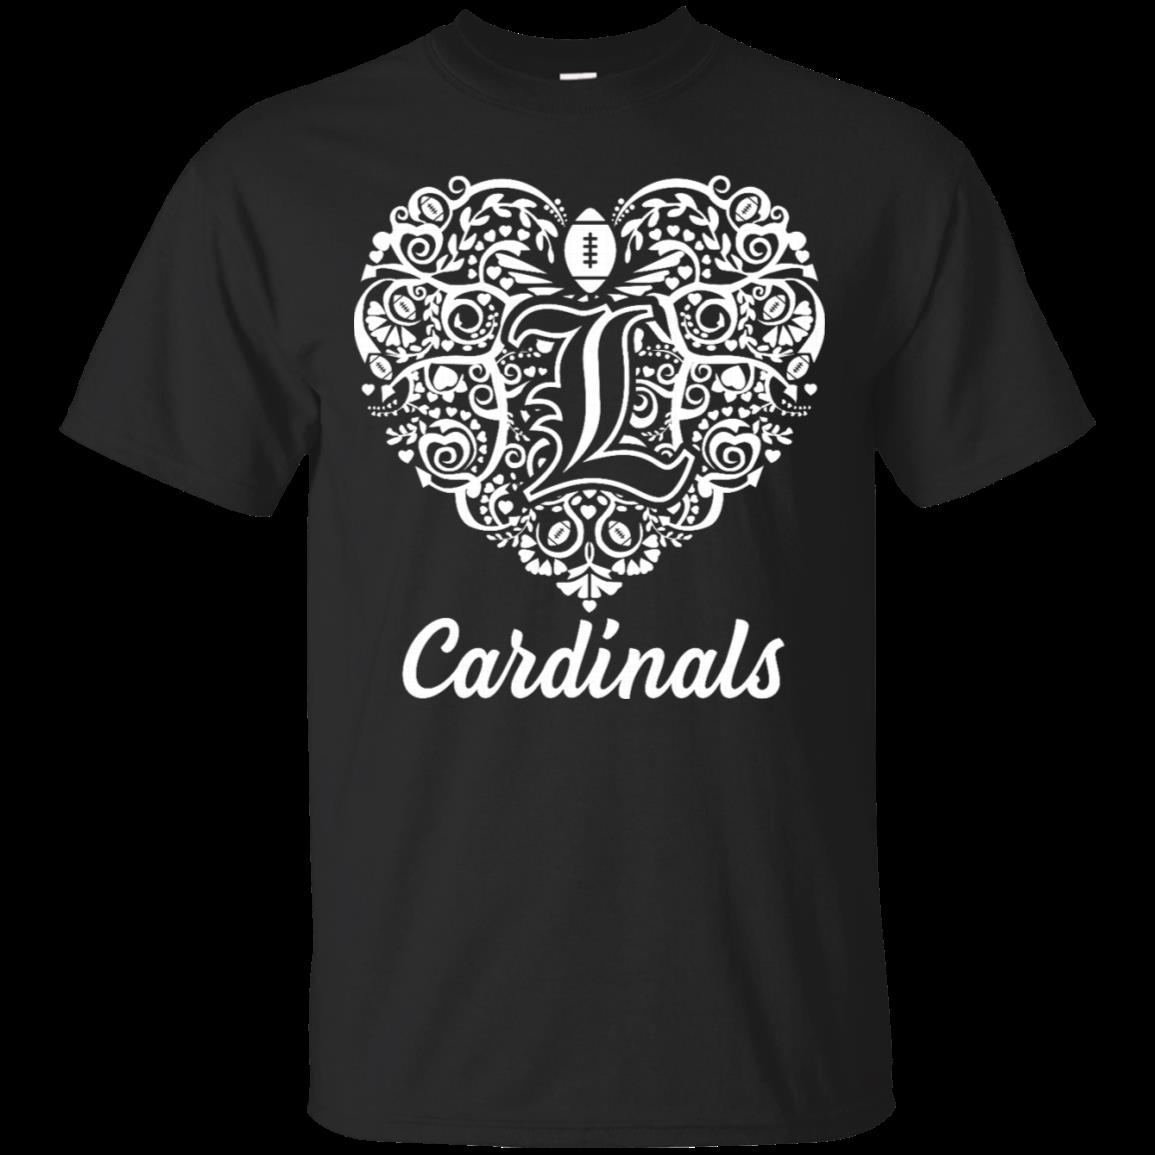 Mfamilygift St. Louis Cardinals Baseball Team Signatures T-Shirt, Tshirt, Hoodie, Sweatshirt, Long Sleeve, Youth, Funny Shirts, Gift Shirts, Graphic Tee